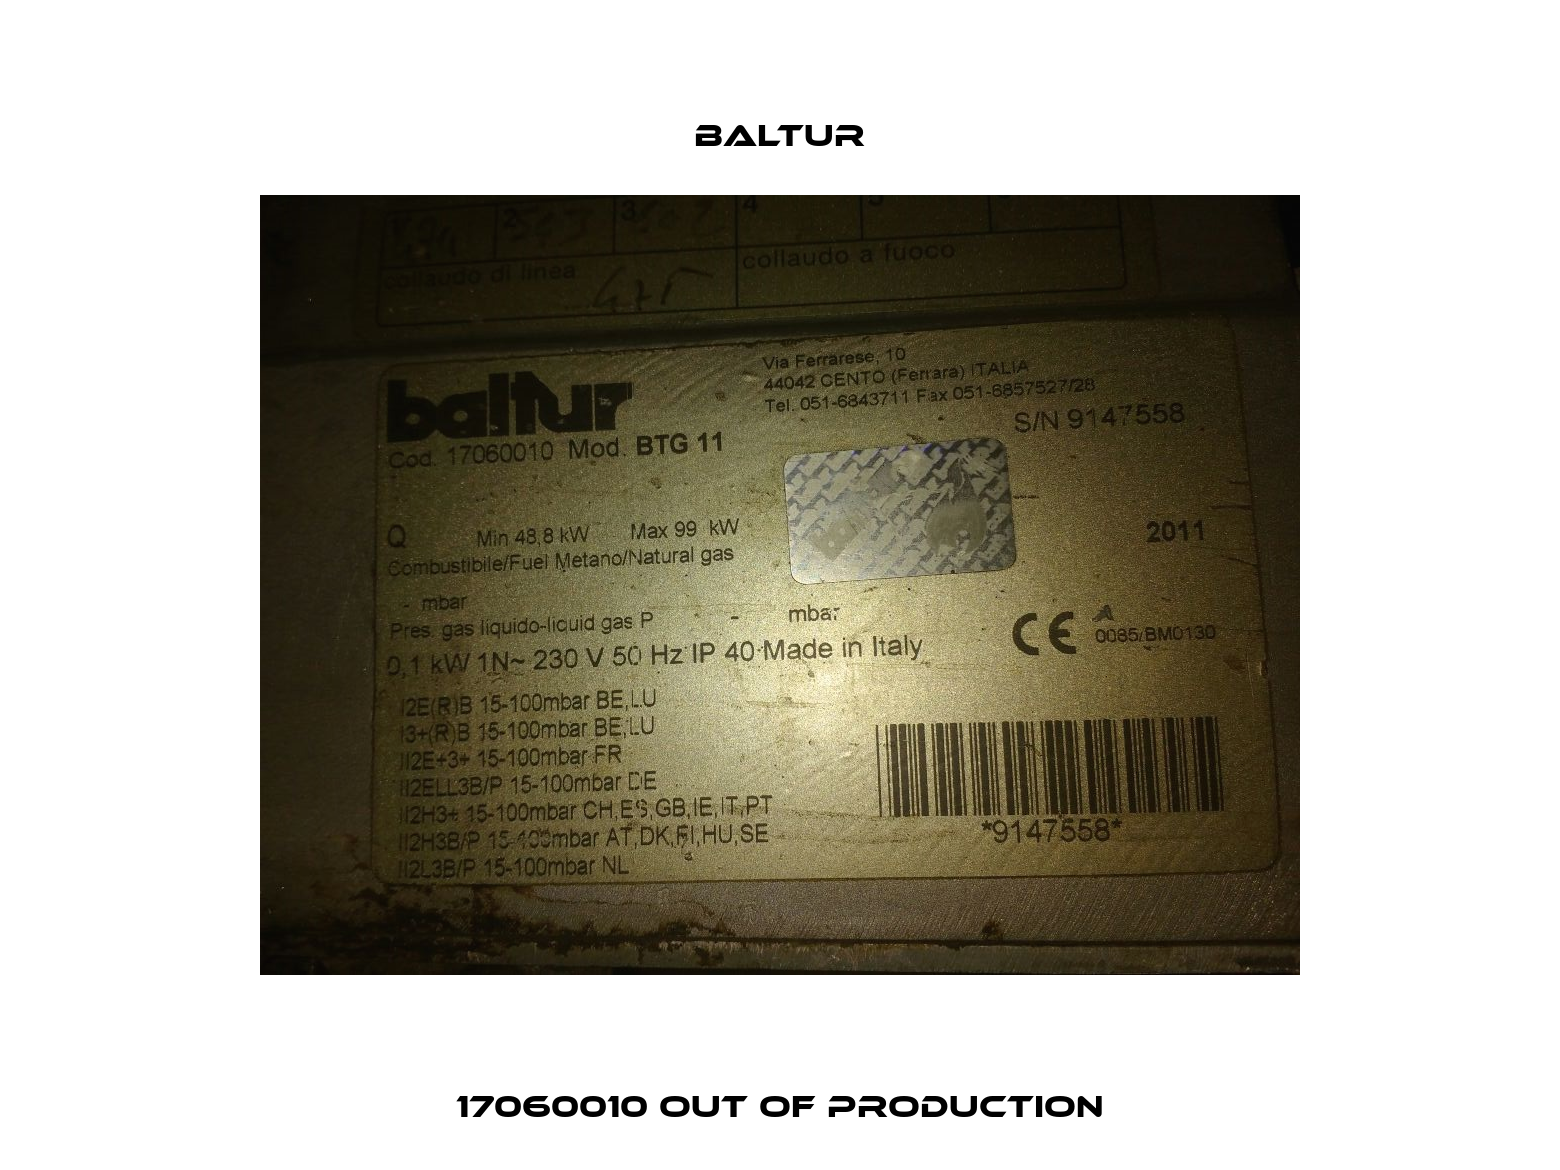 17060010 out of production Baltur